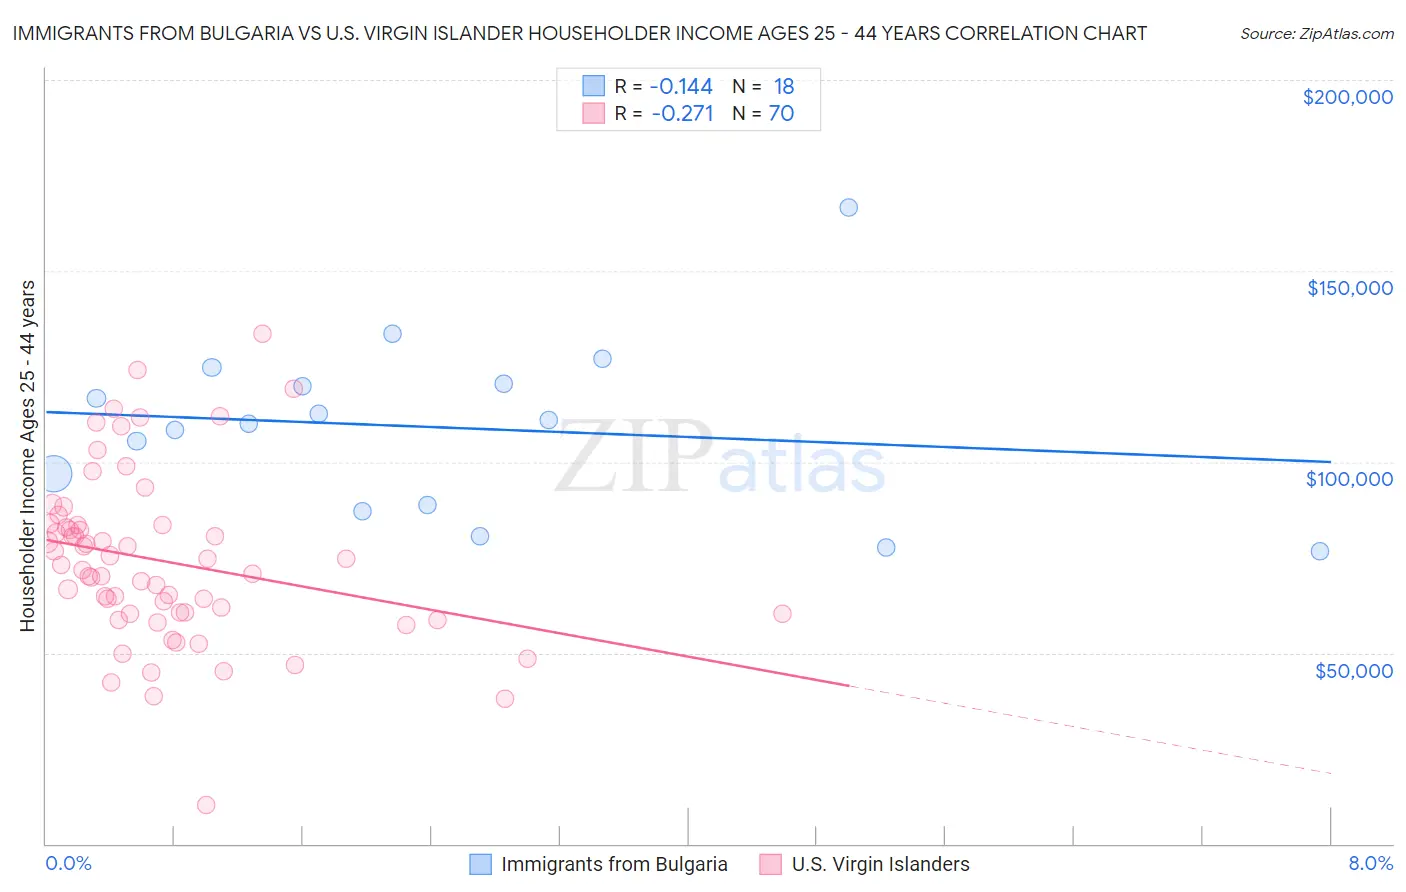 Immigrants from Bulgaria vs U.S. Virgin Islander Householder Income Ages 25 - 44 years